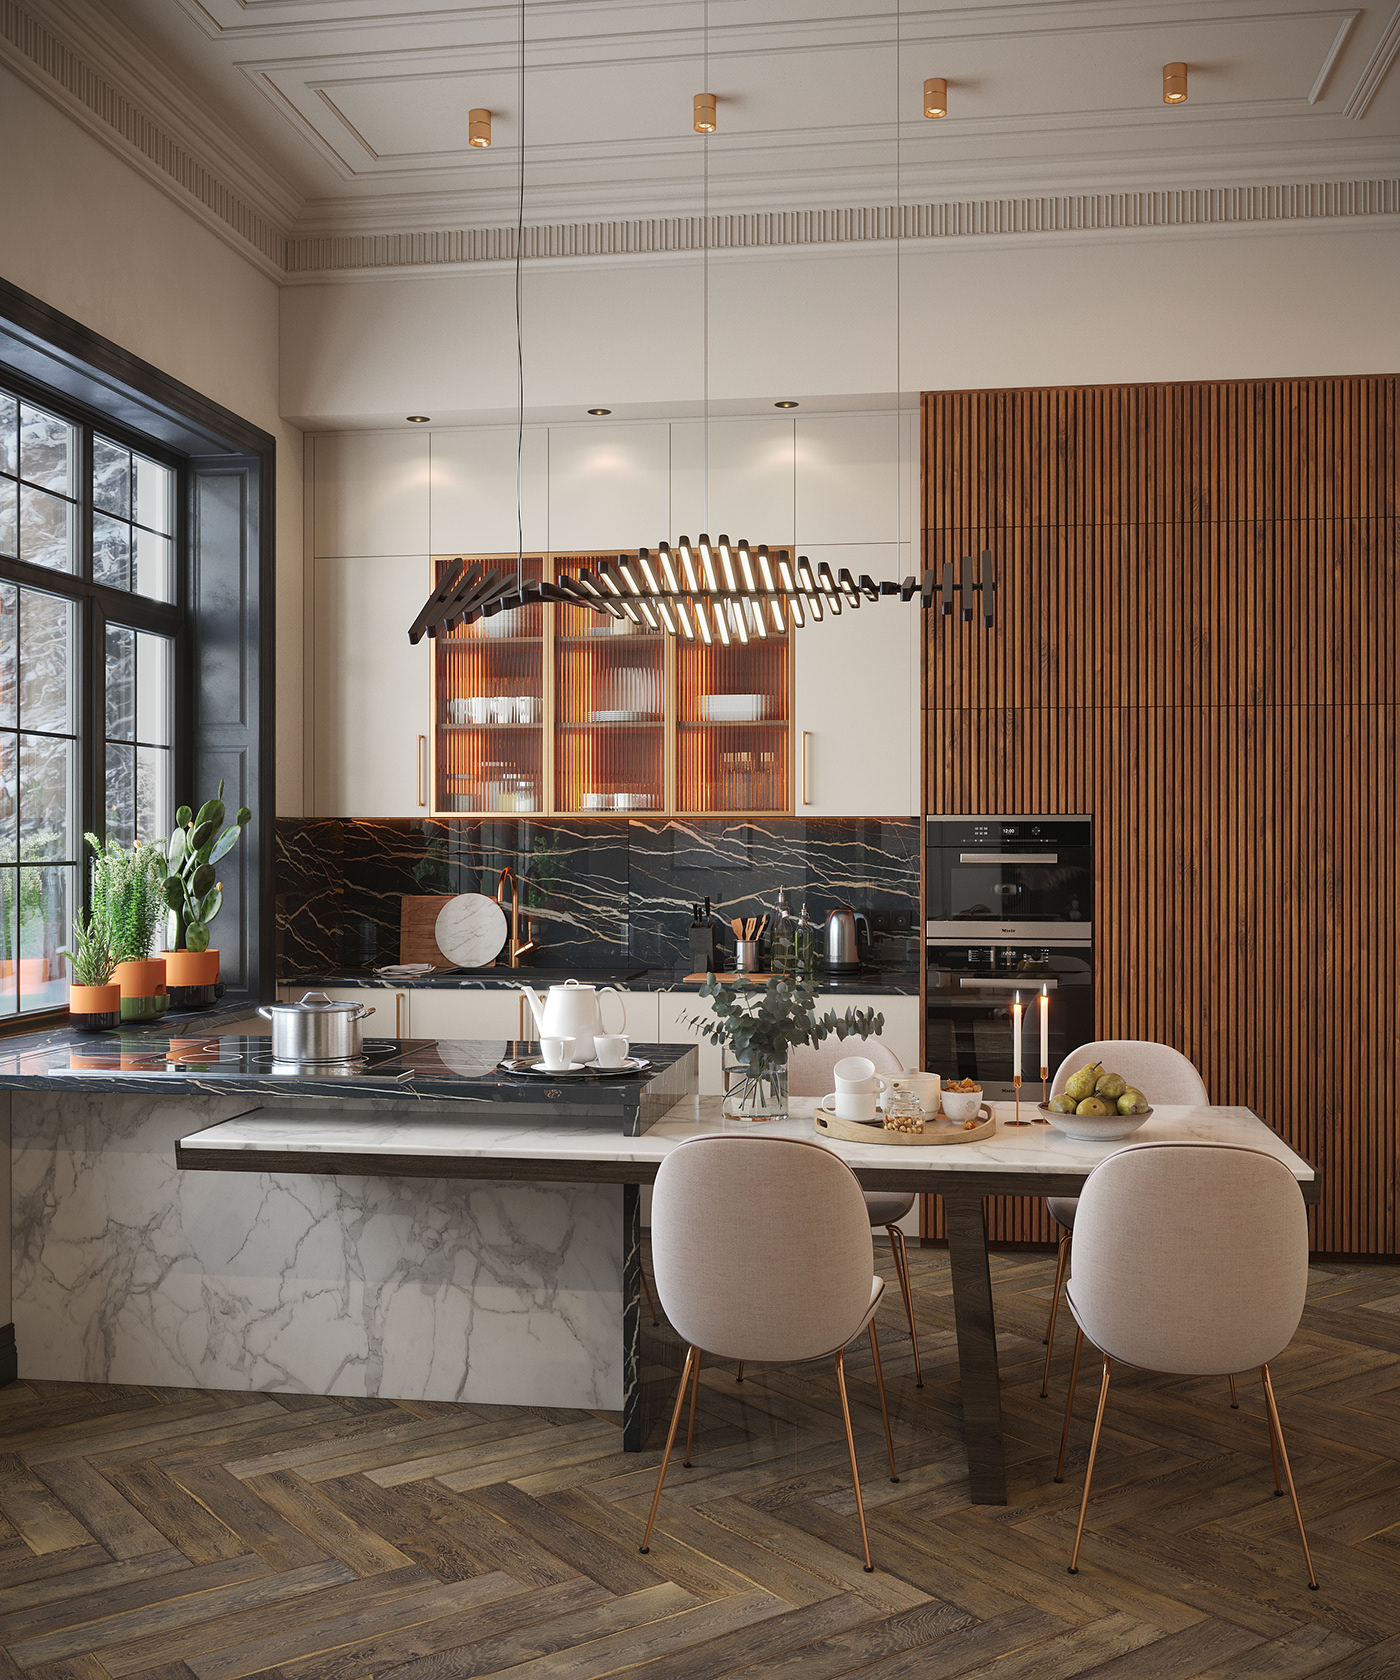 architecture interior design  visualization Render 3ds max apartments Hall hallway kitchen modern classic